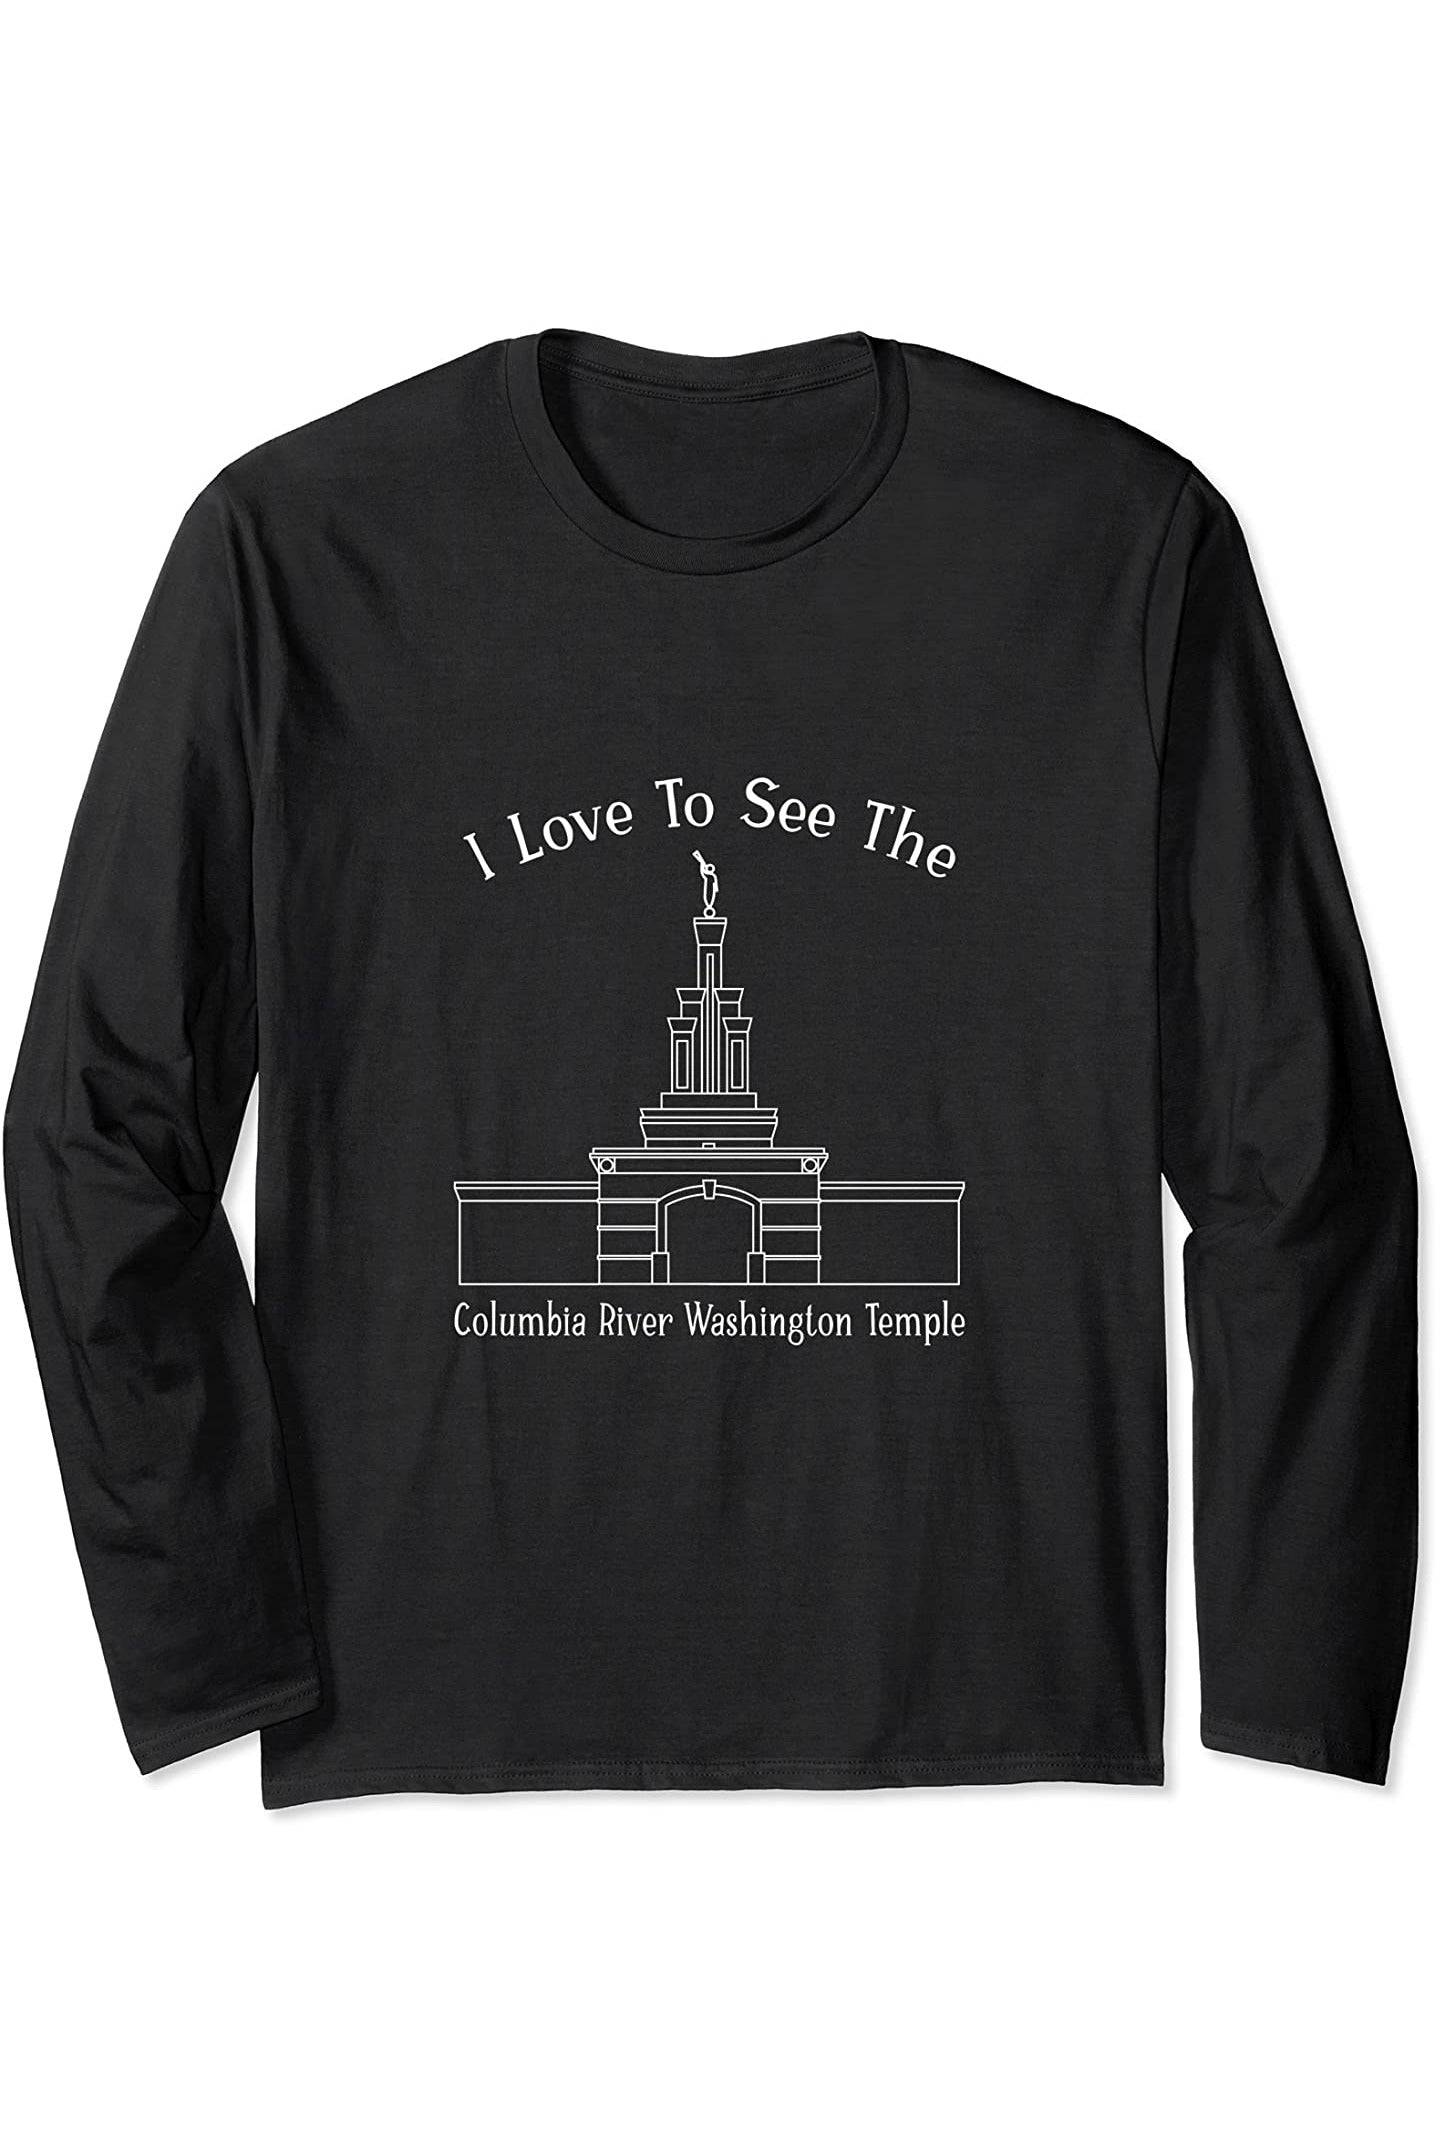 Columbia River Washington Temple Long Sleeve T-Shirt - Happy Style (English) US